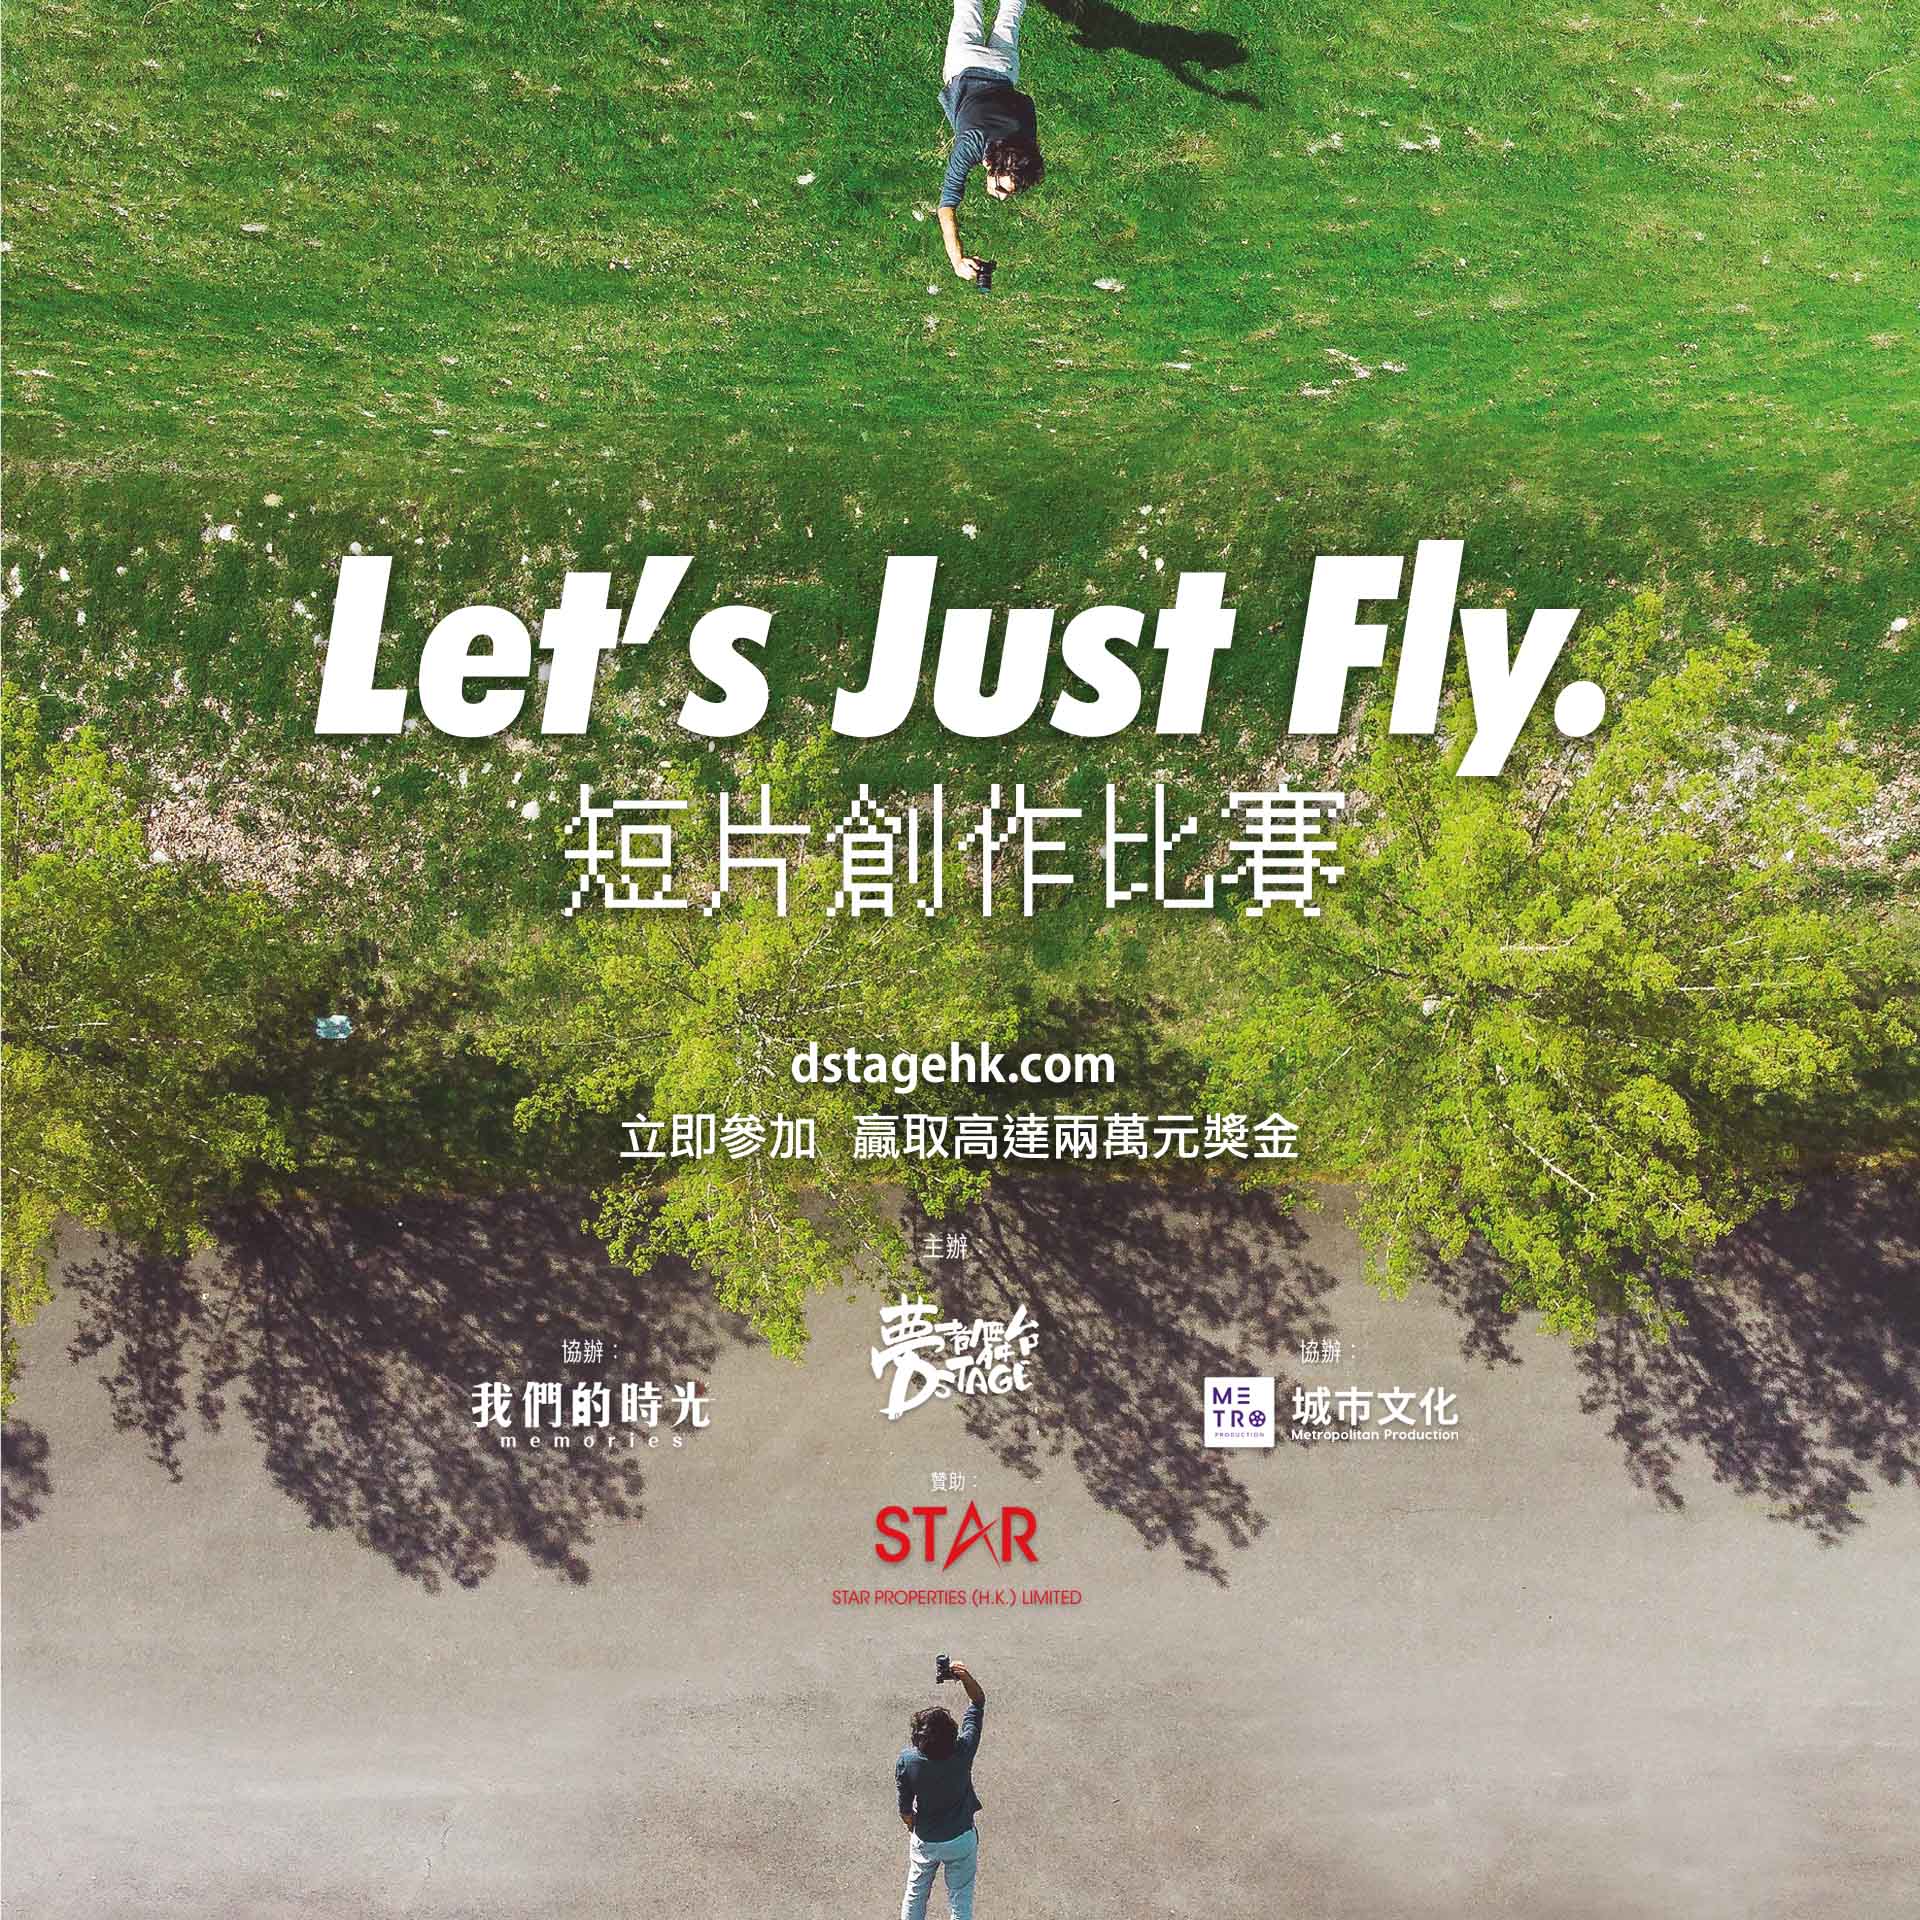 夢者舞台 「Let’s Just Fly 短片創作比賽」